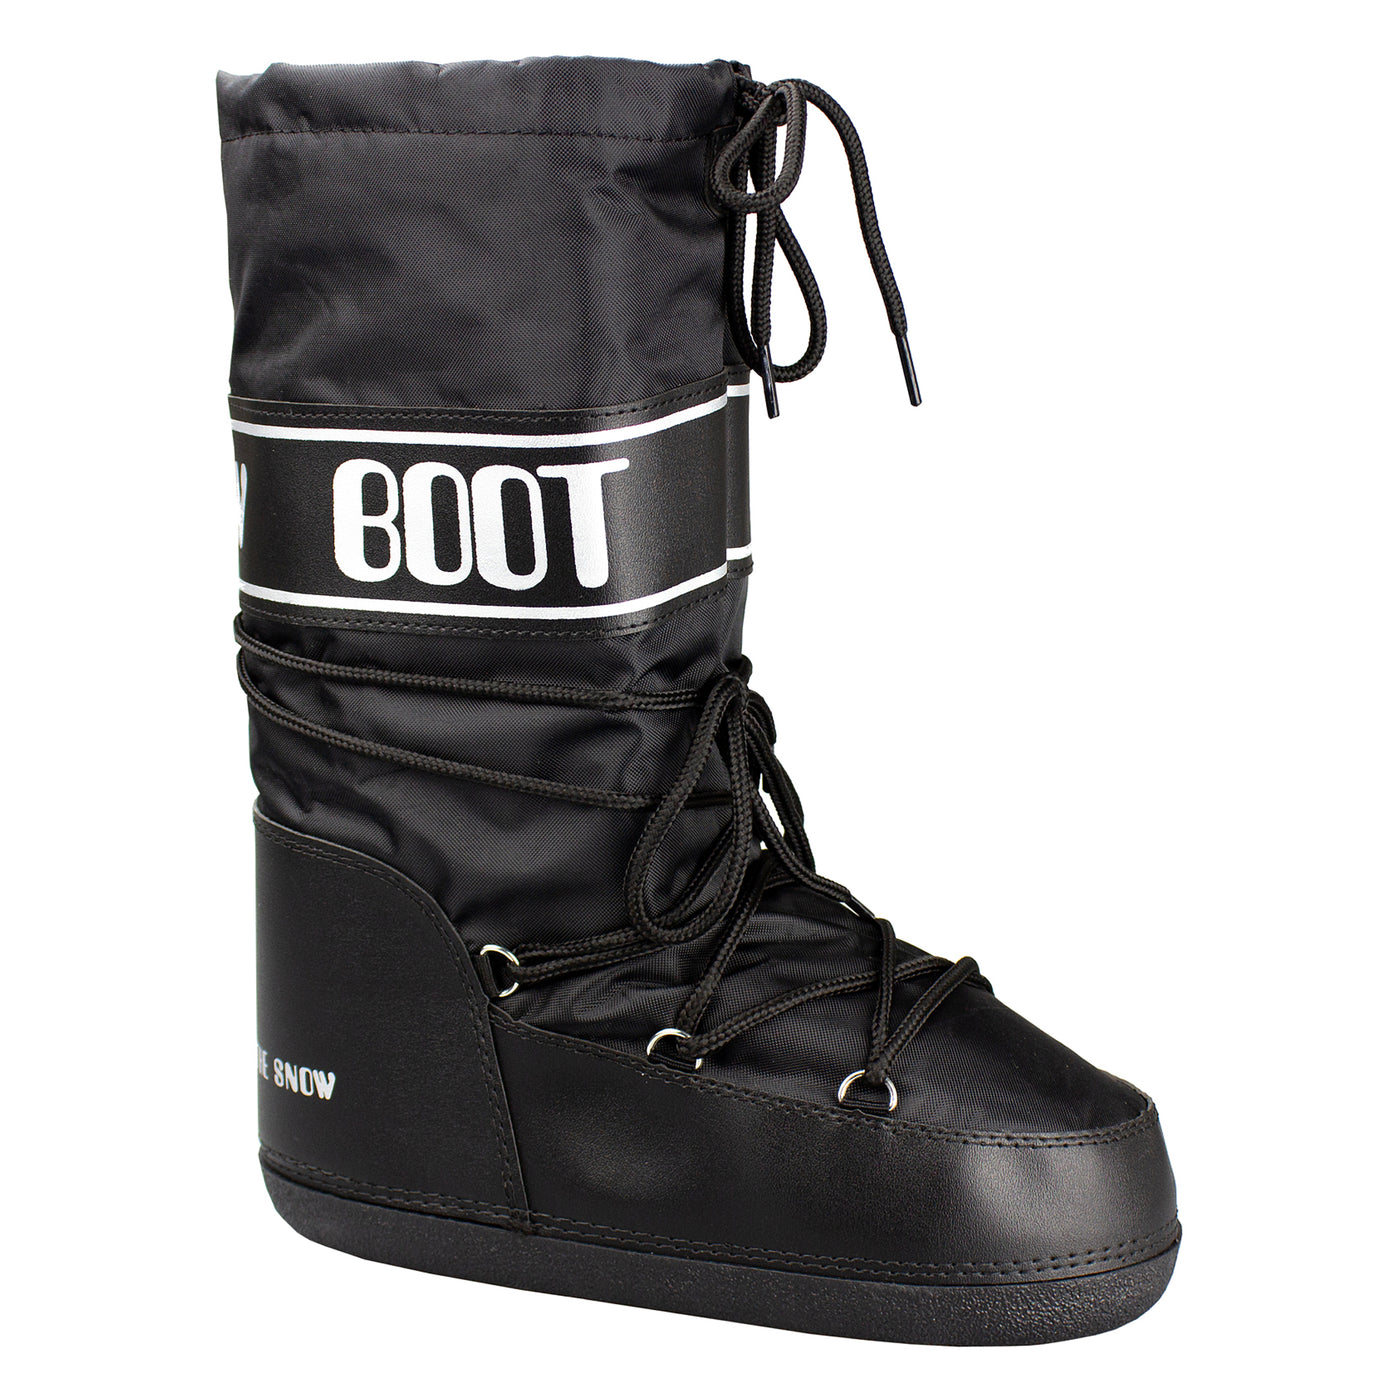 Retro Snow Boots- Black